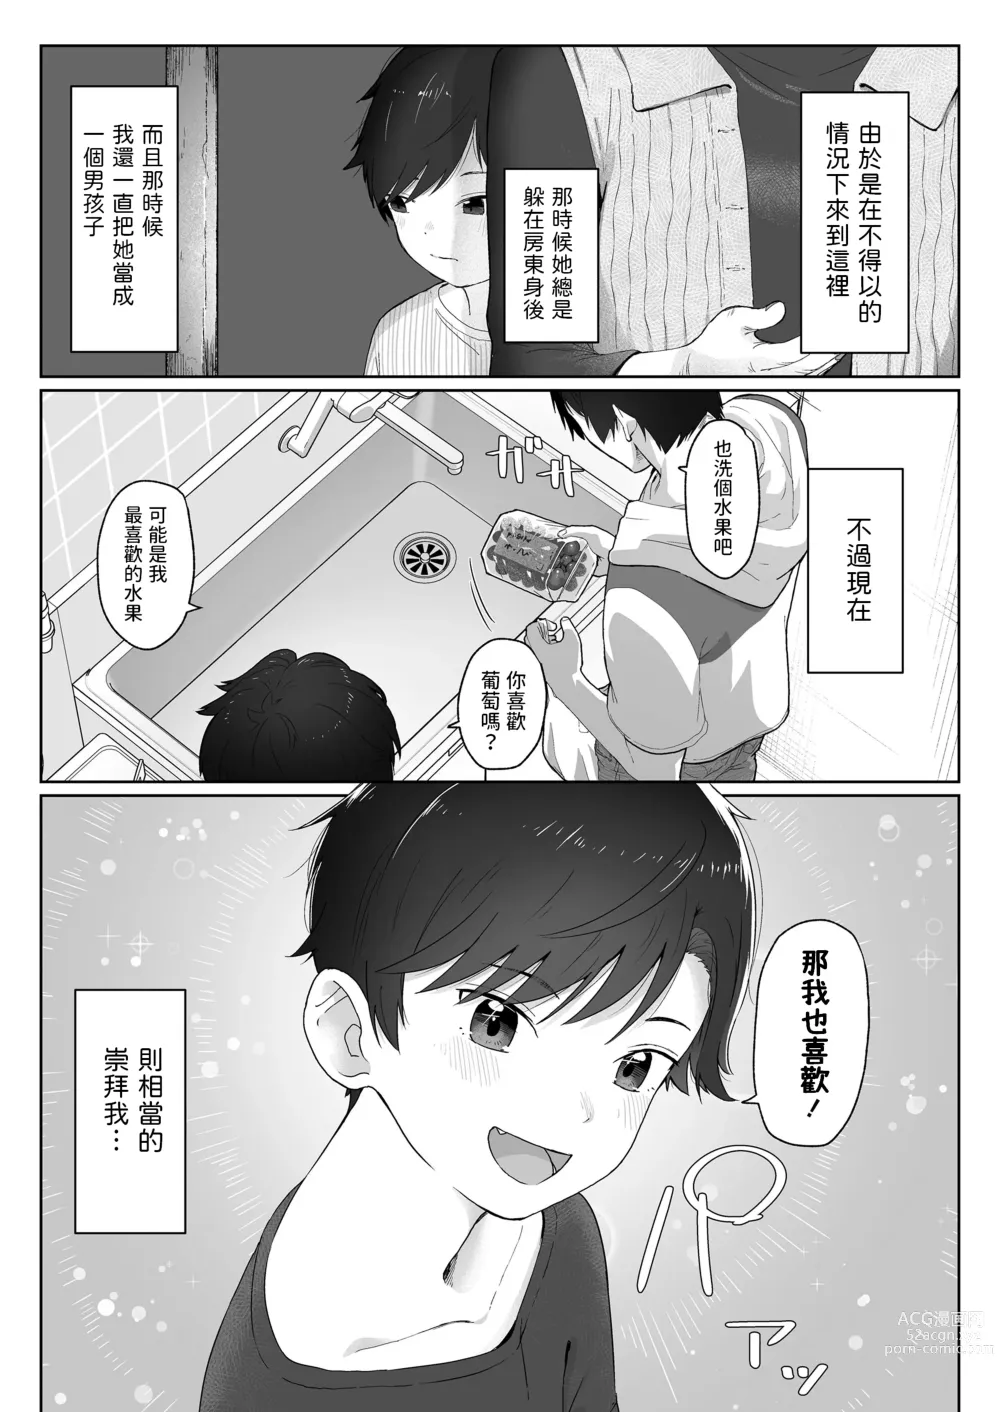 Page 3 of manga Ore ga Taberu kara